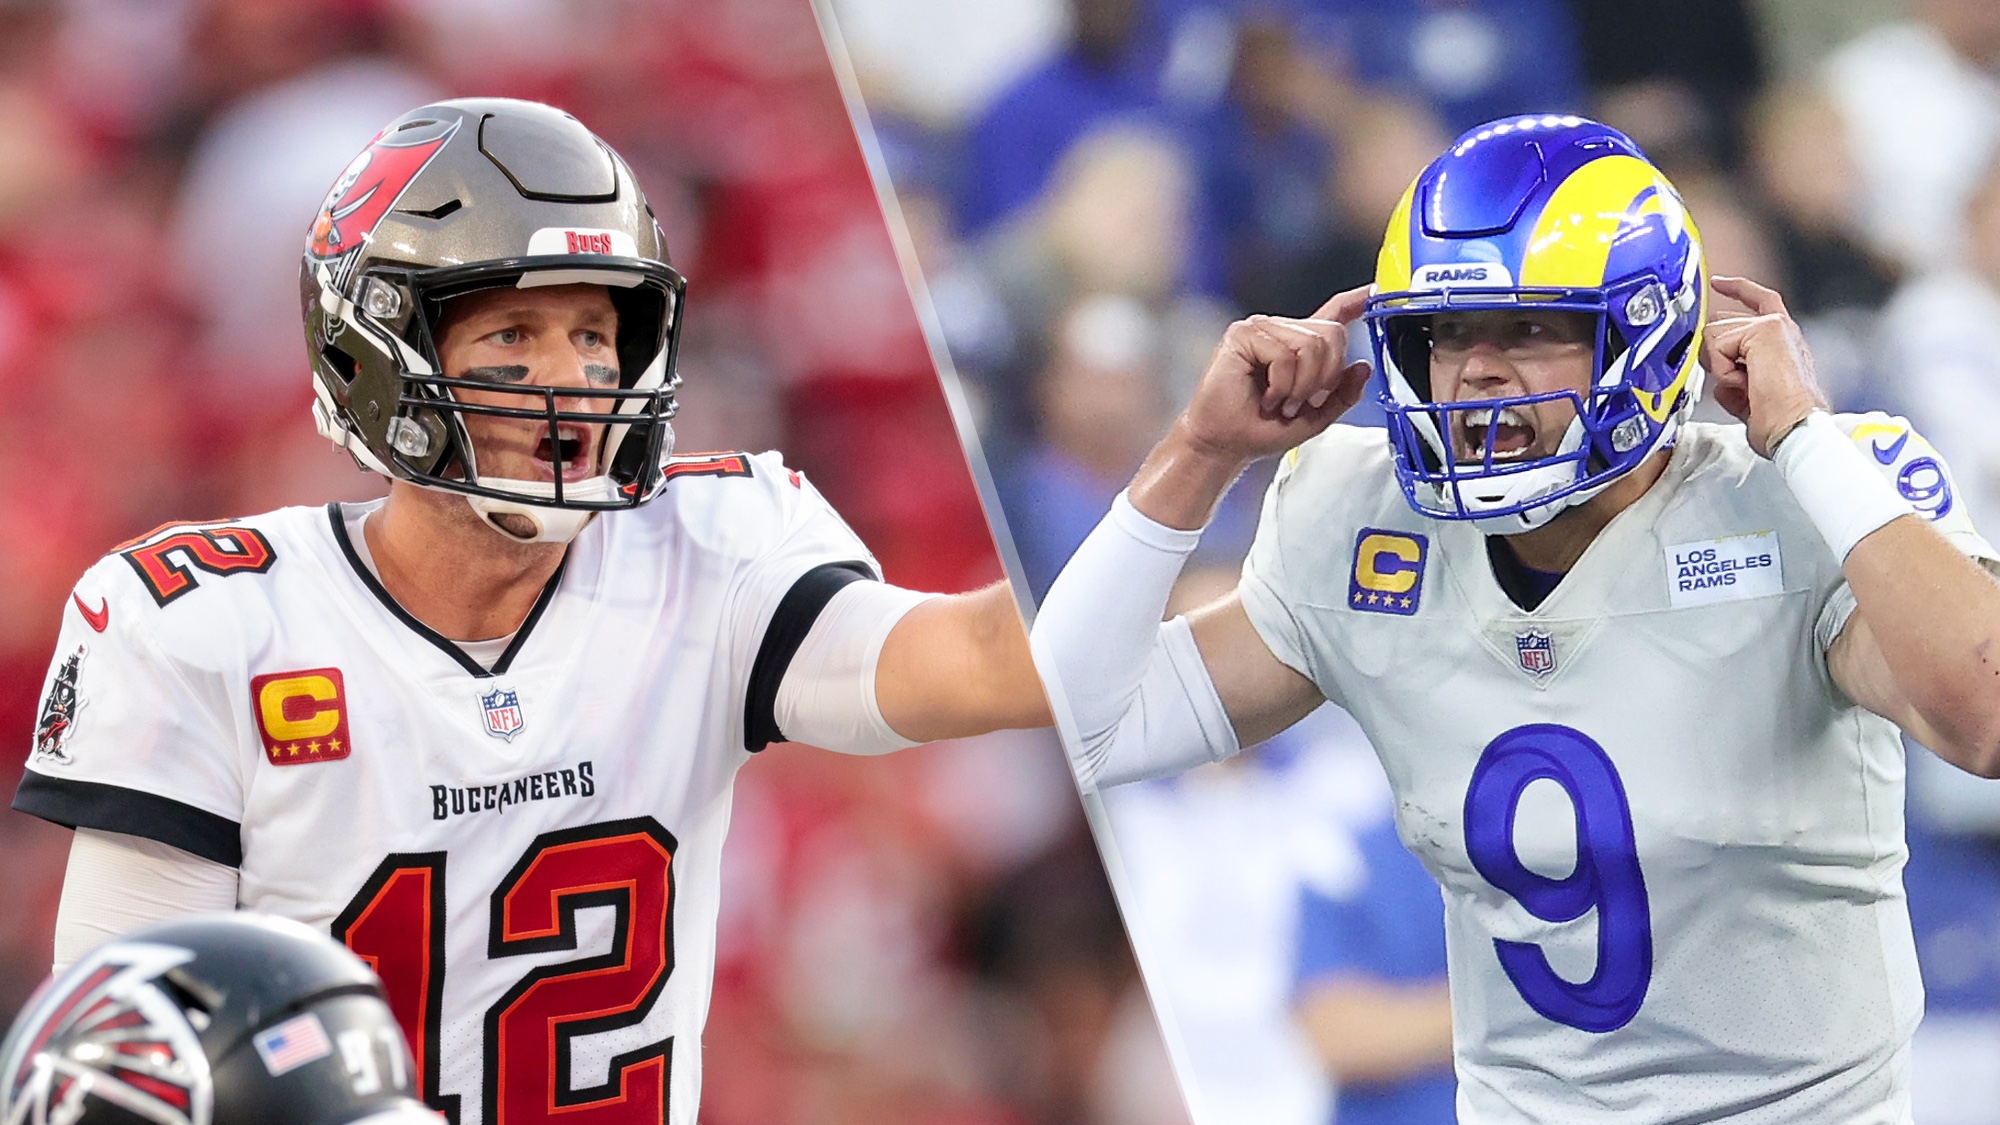 Buccaneers vs Rams live stream: How to watch NFL week 3 game online